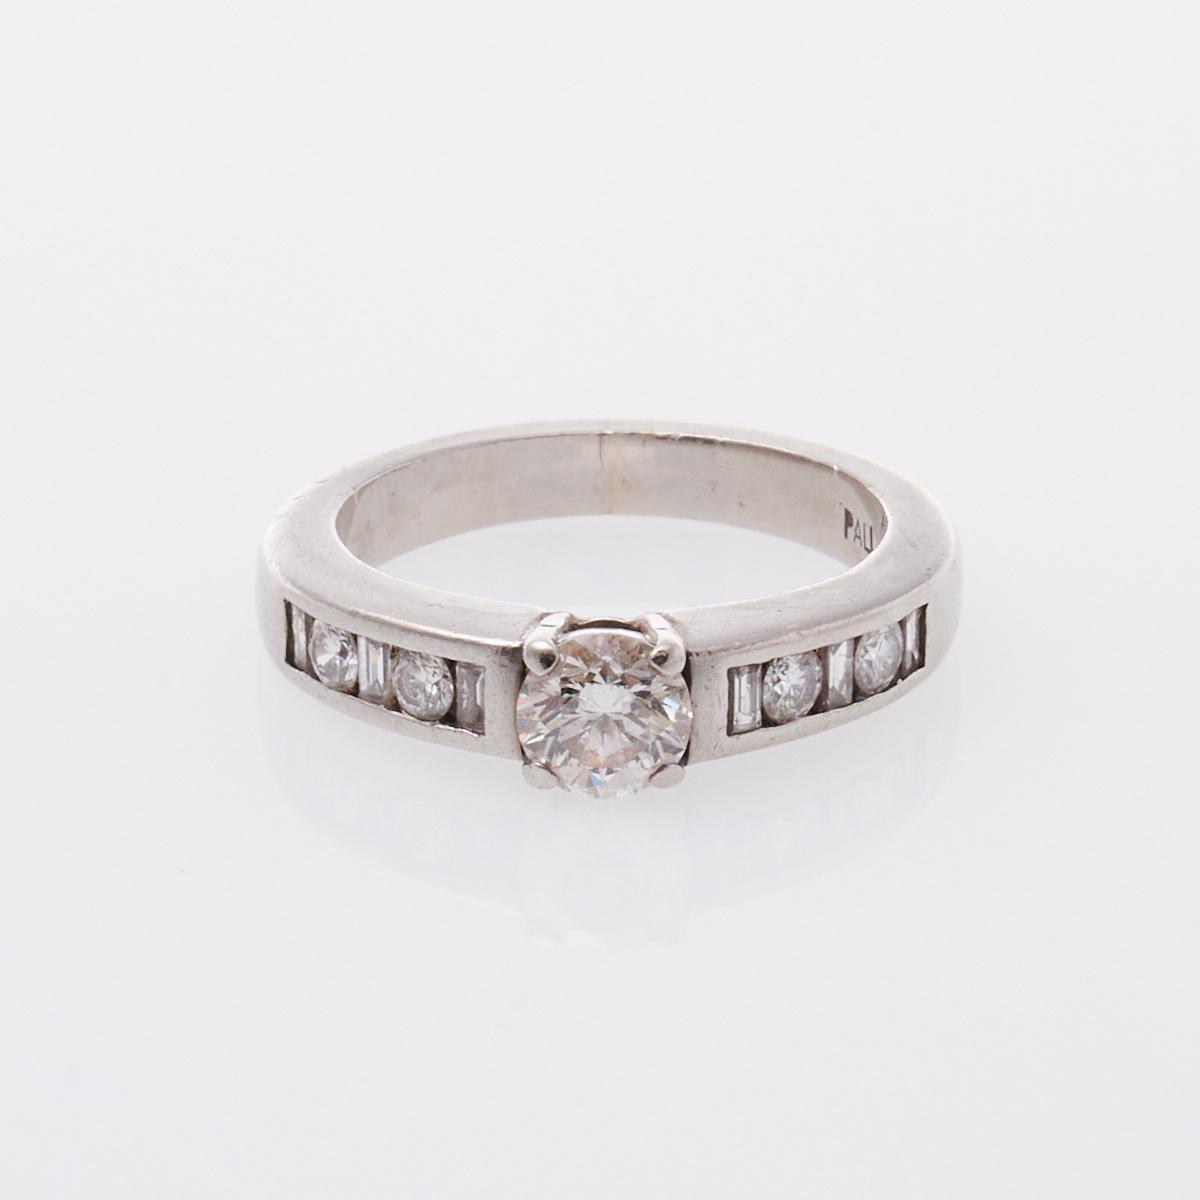 Gents 5mm Palladium Hammered Patterned Wedding Ring | International Diamond  Brokers